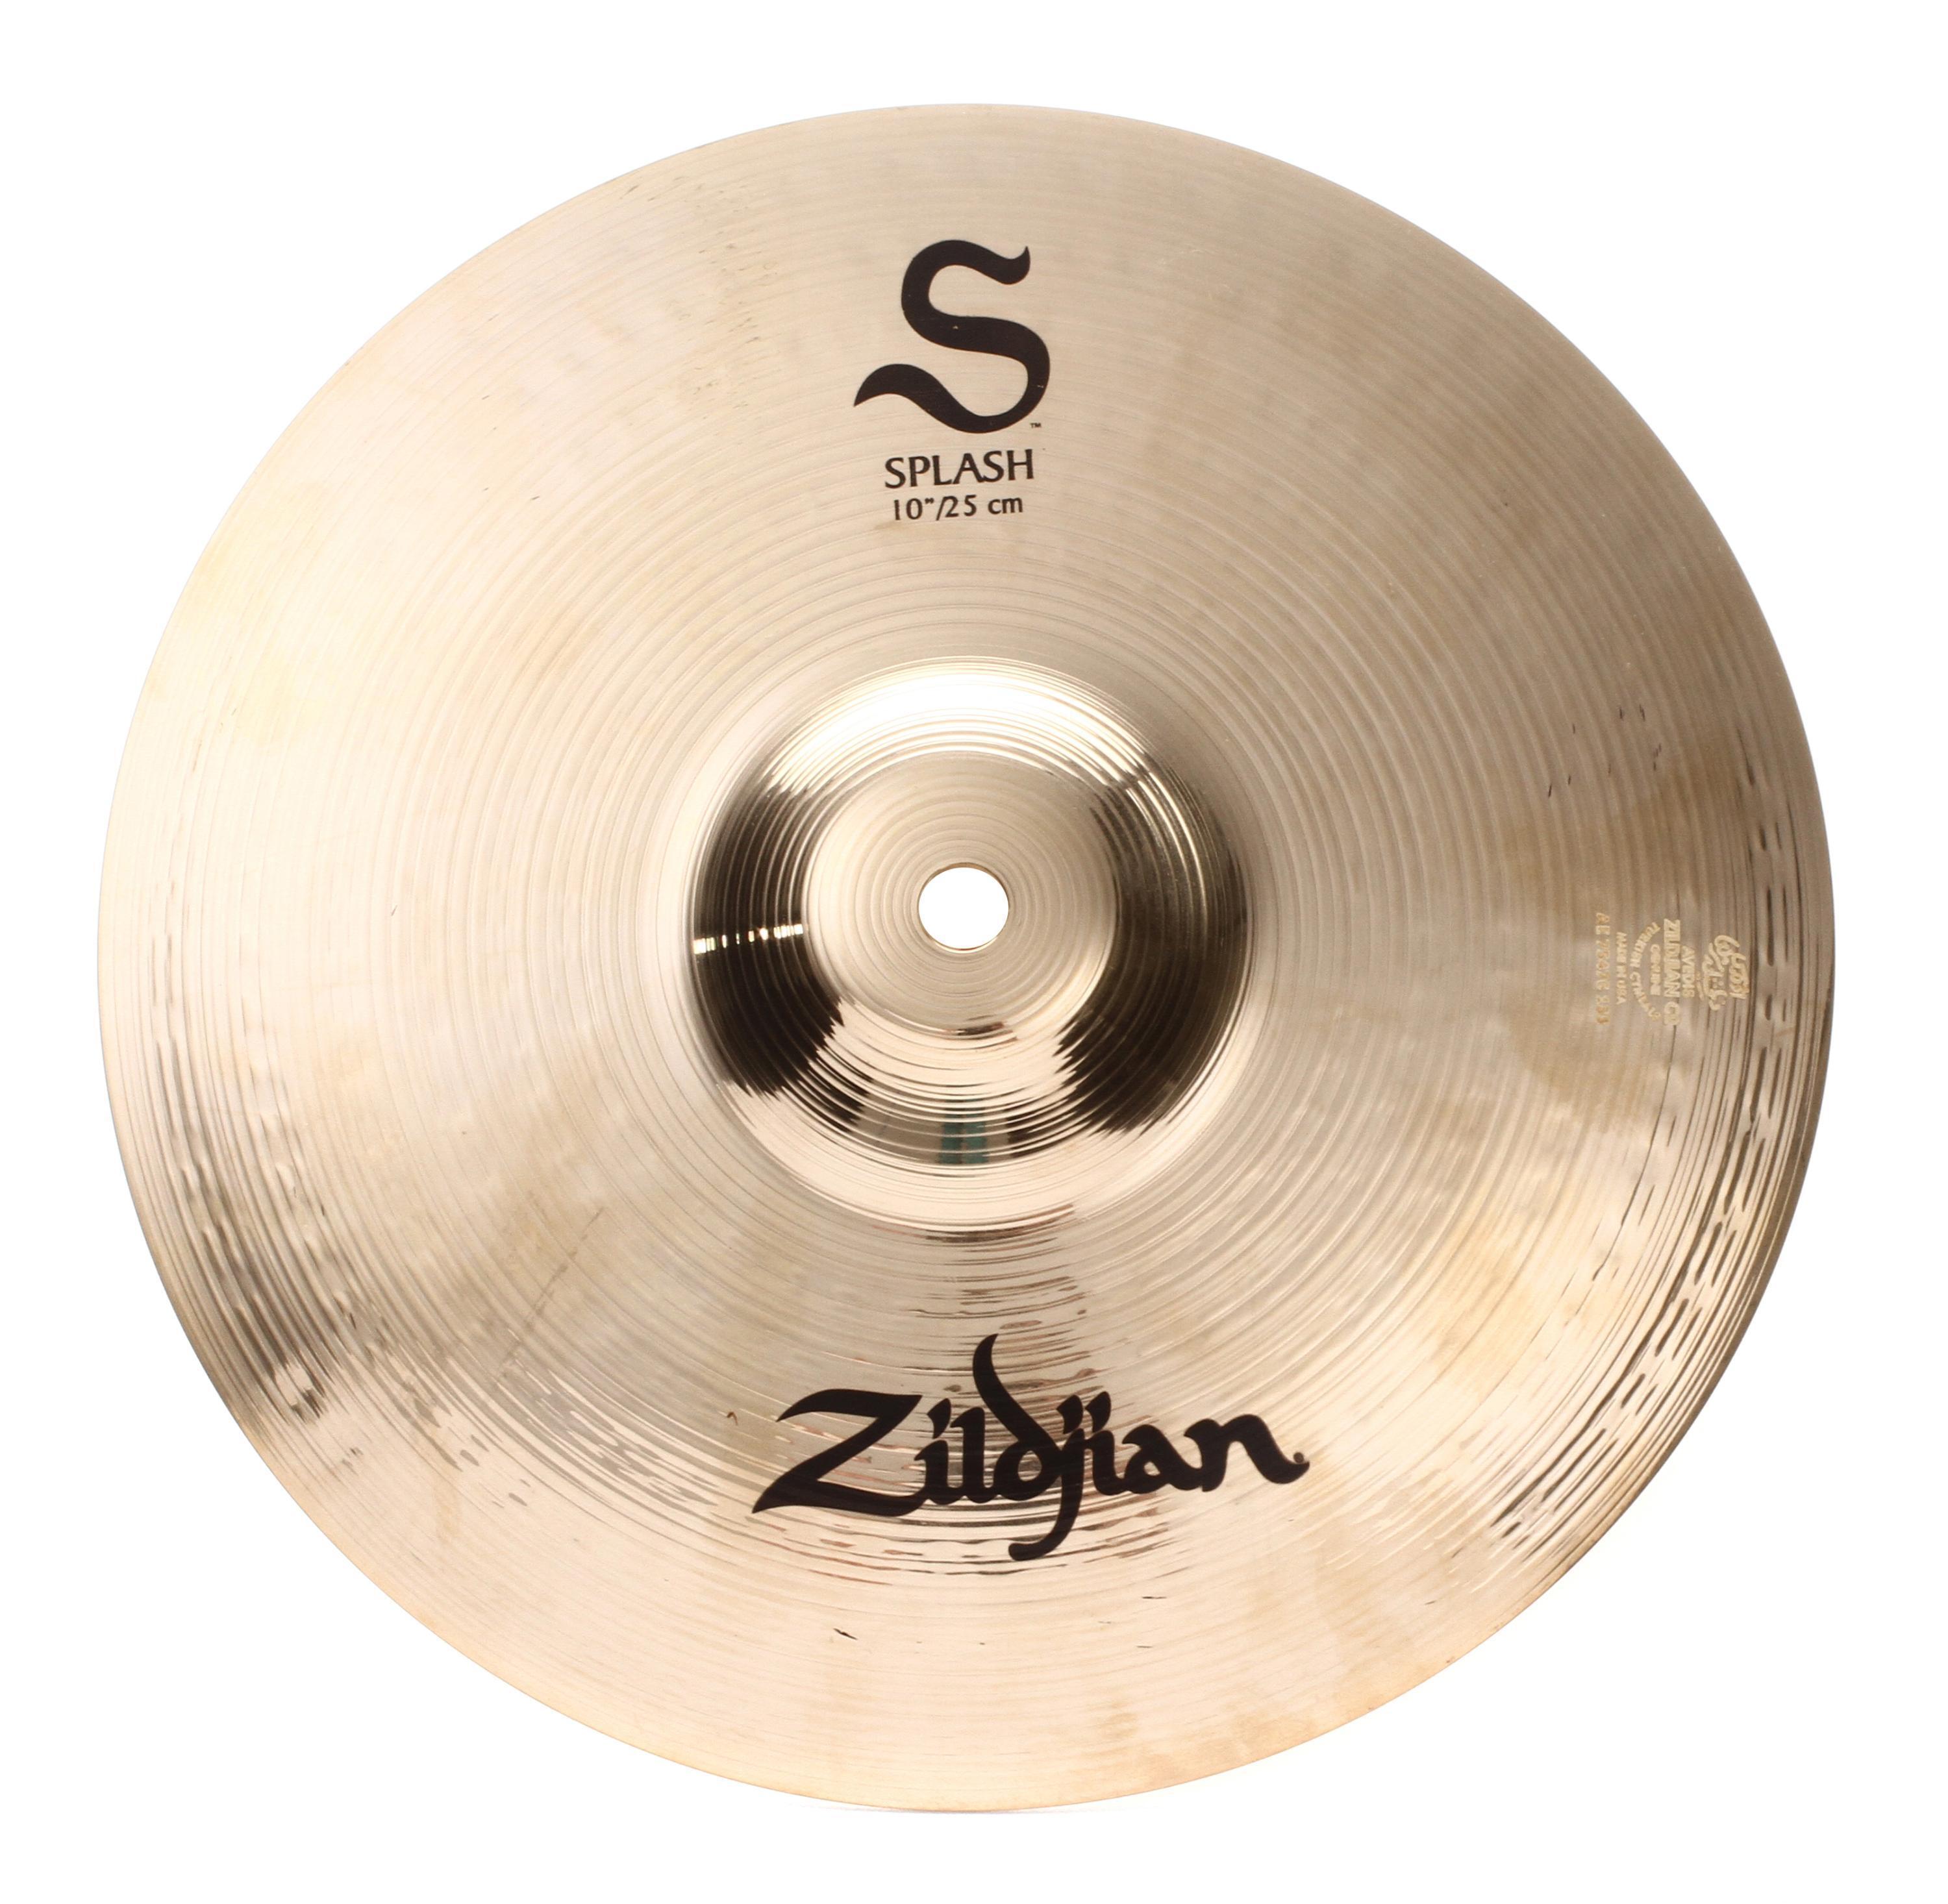 Zildjian 10 inch S Series Splash Cymbal | Sweetwater